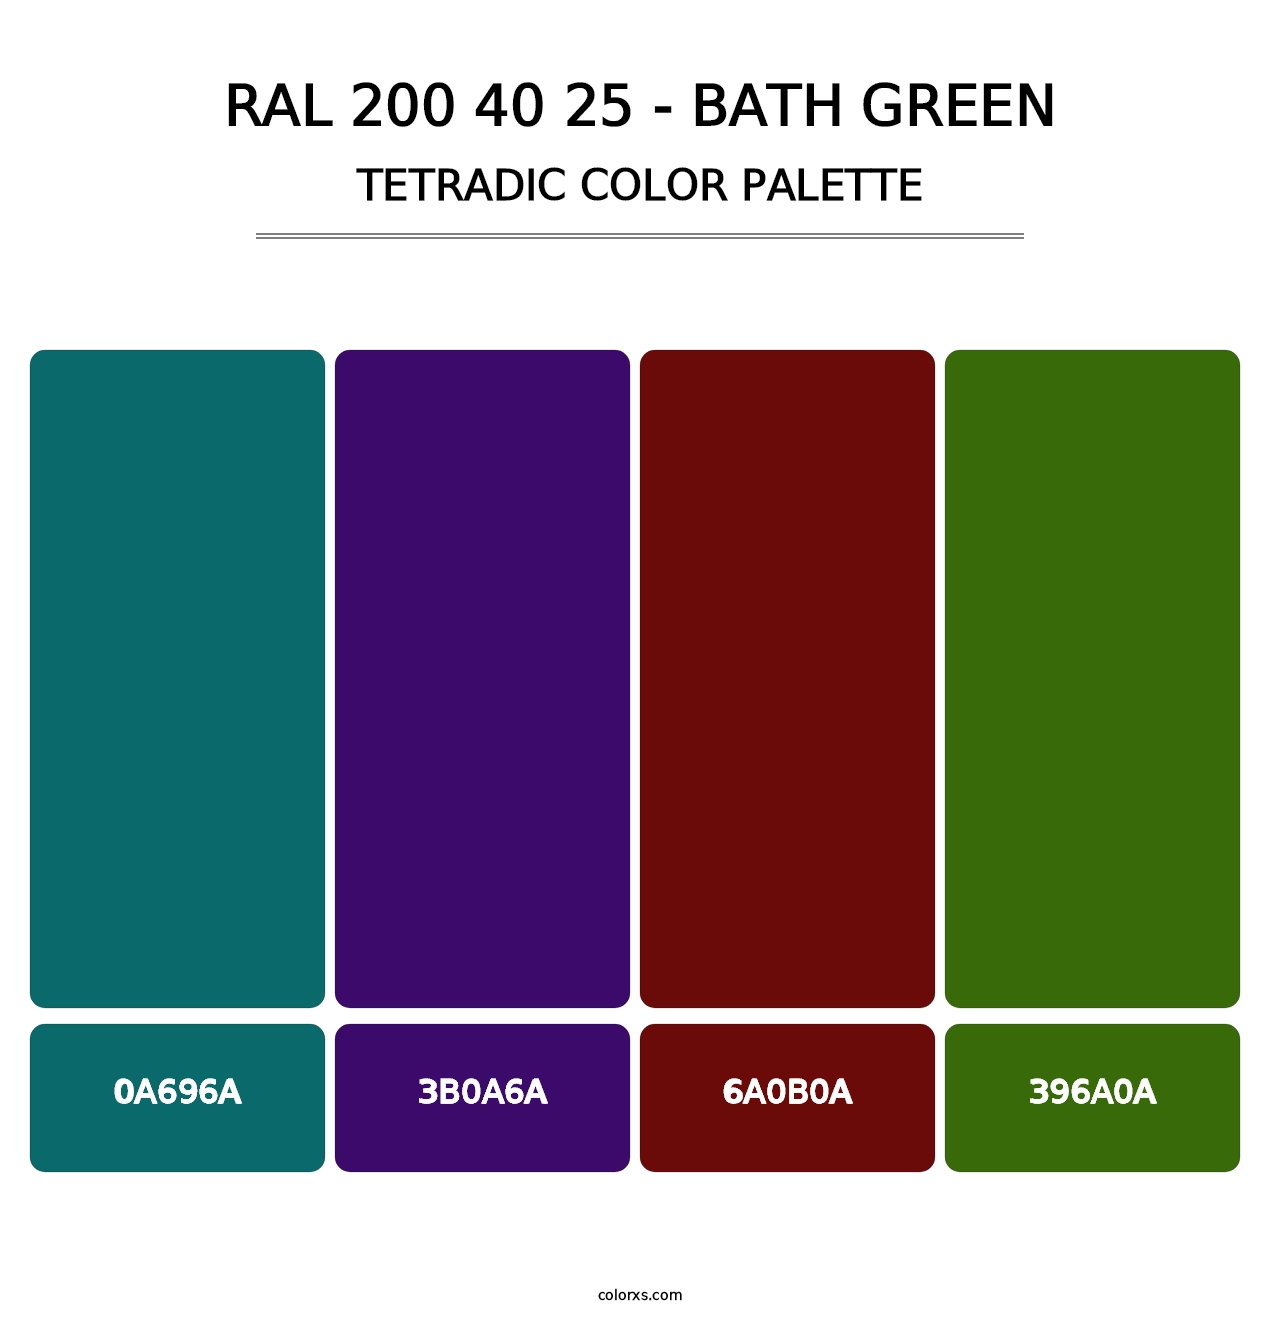 RAL 200 40 25 - Bath Green - Tetradic Color Palette